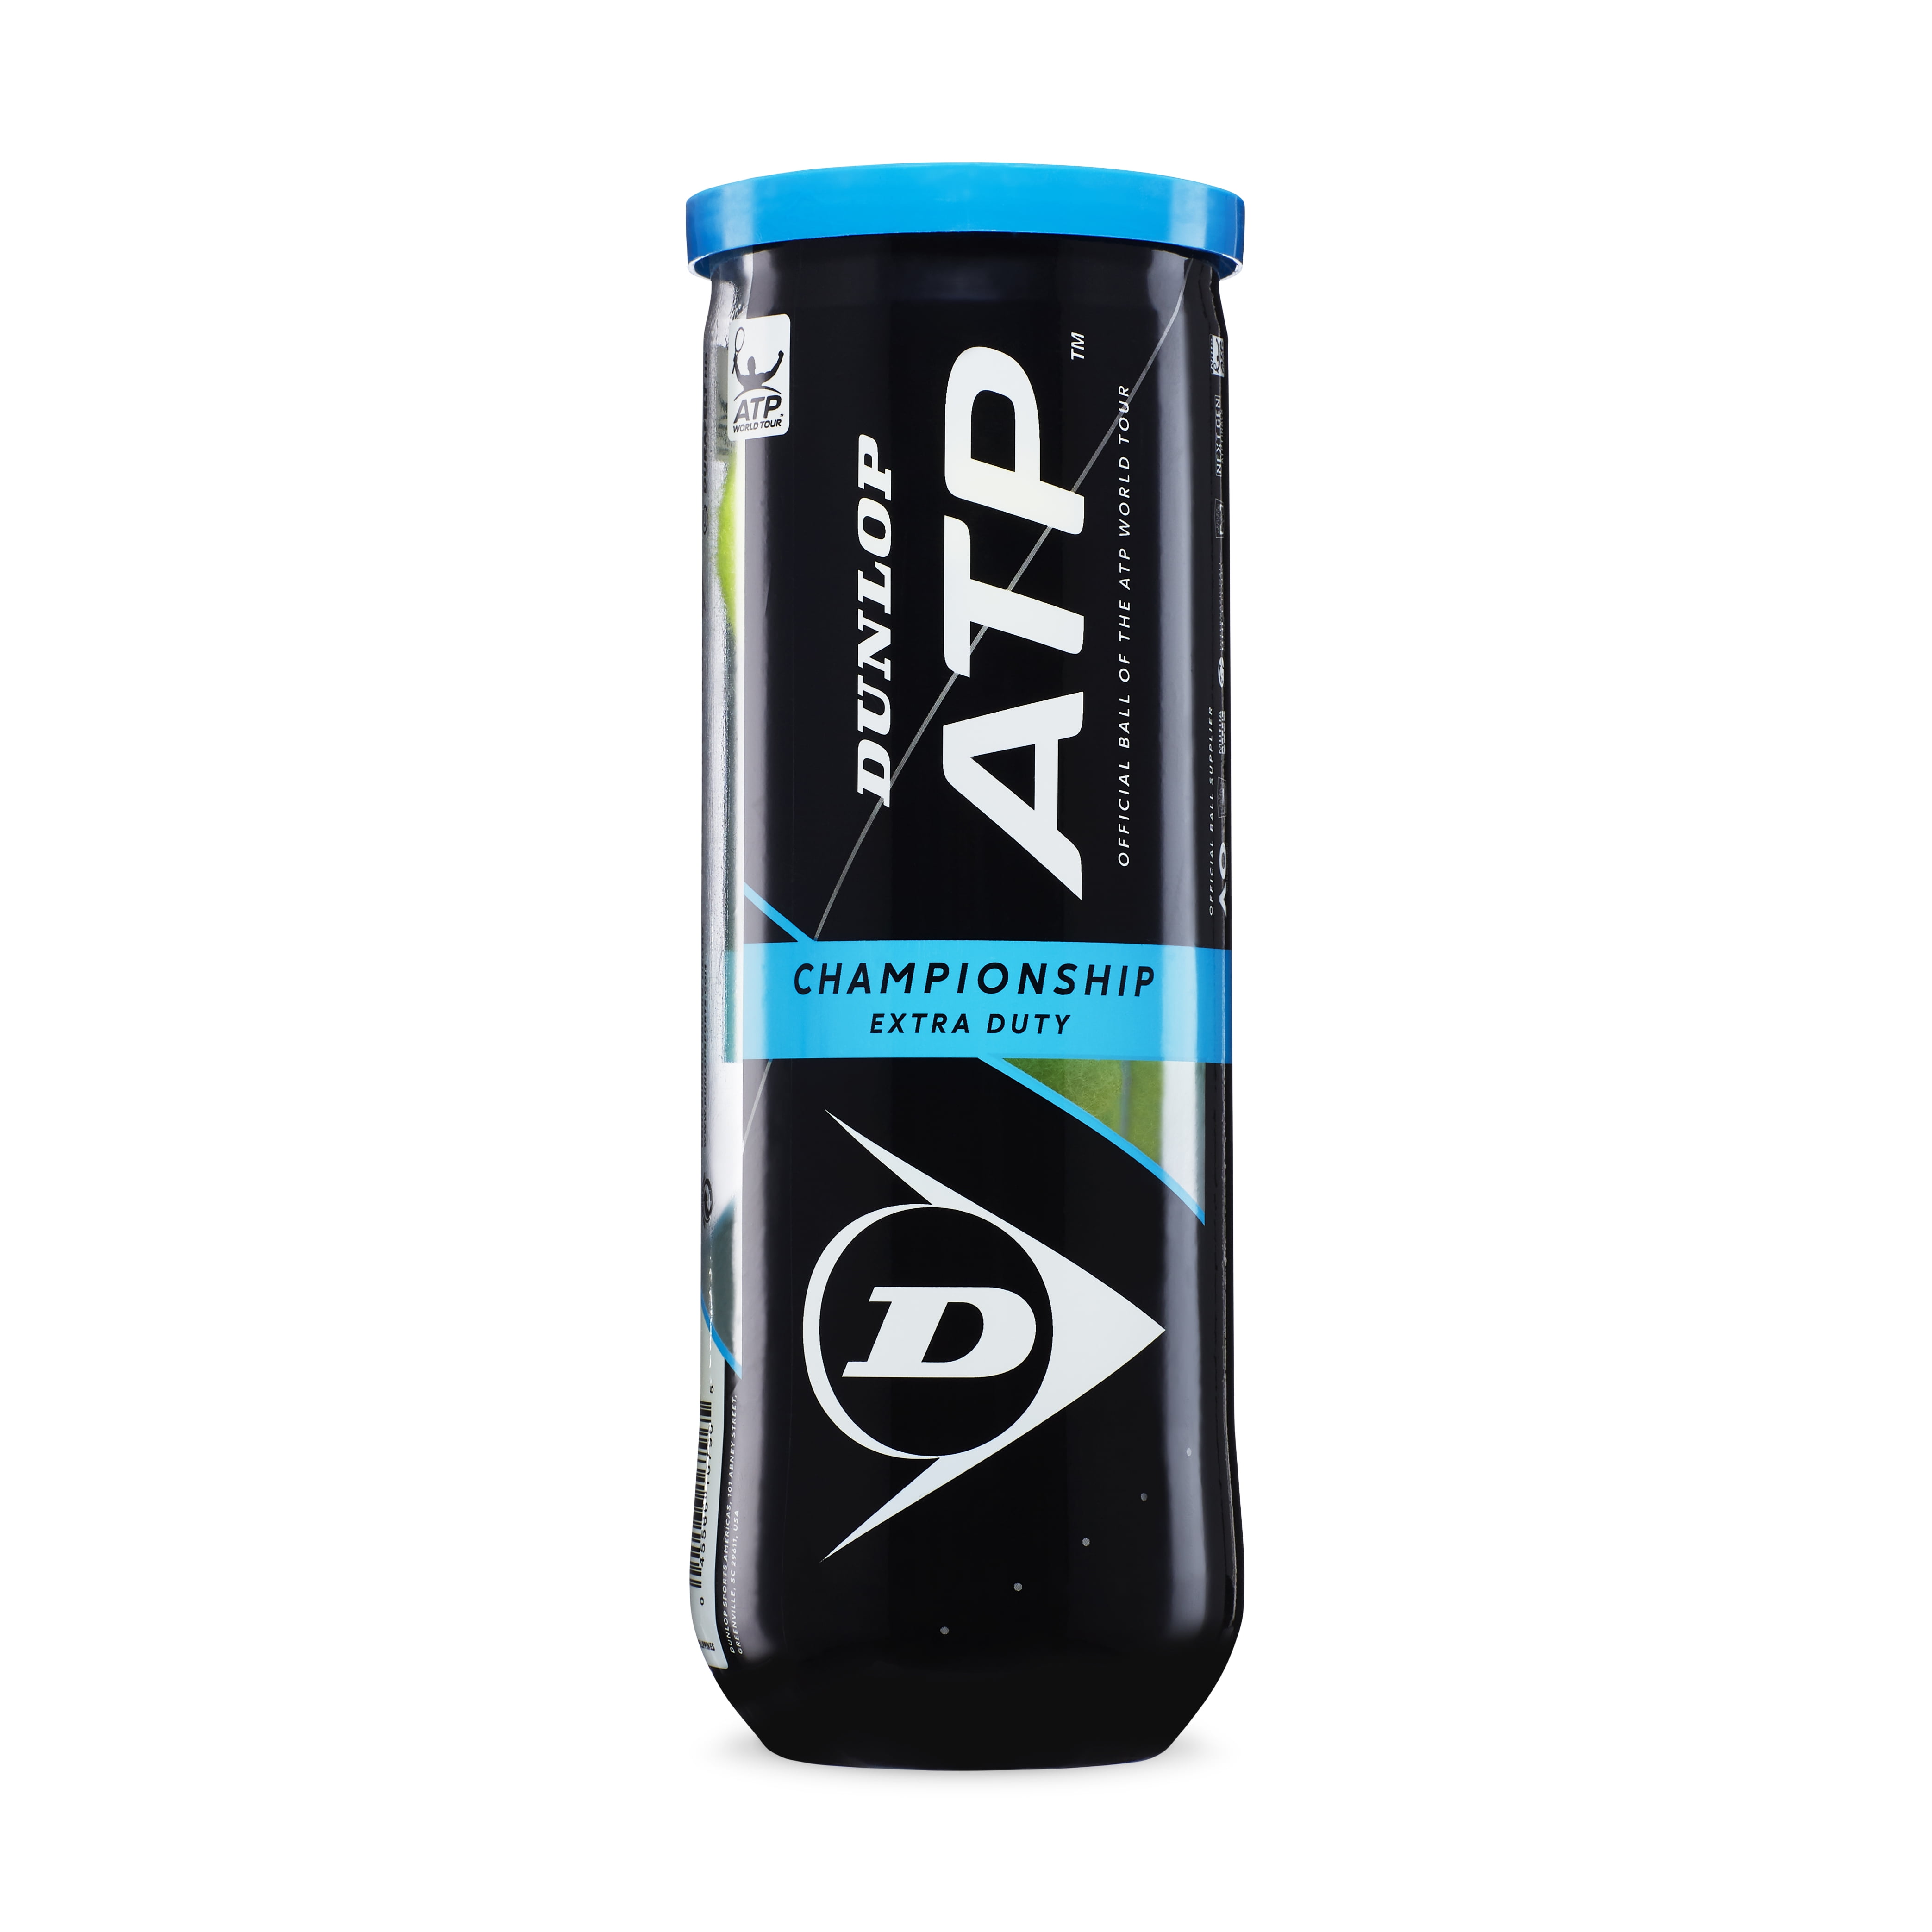 Dunlop ATP Championship Extra Duty Tennis Balls (3 balls)